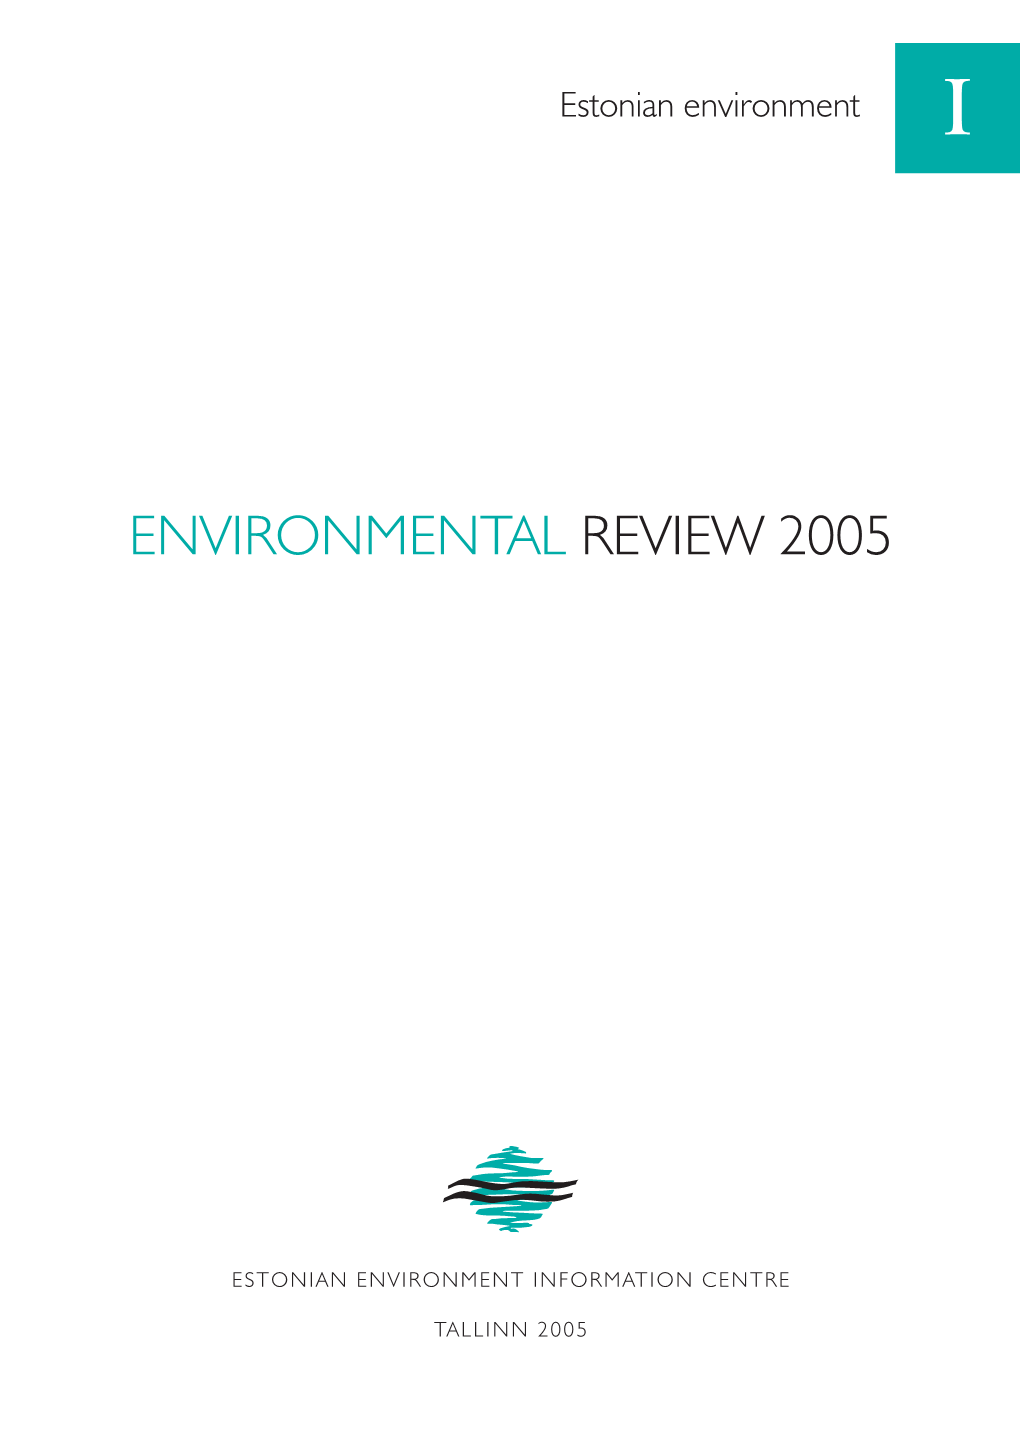 Environmental Review 2005